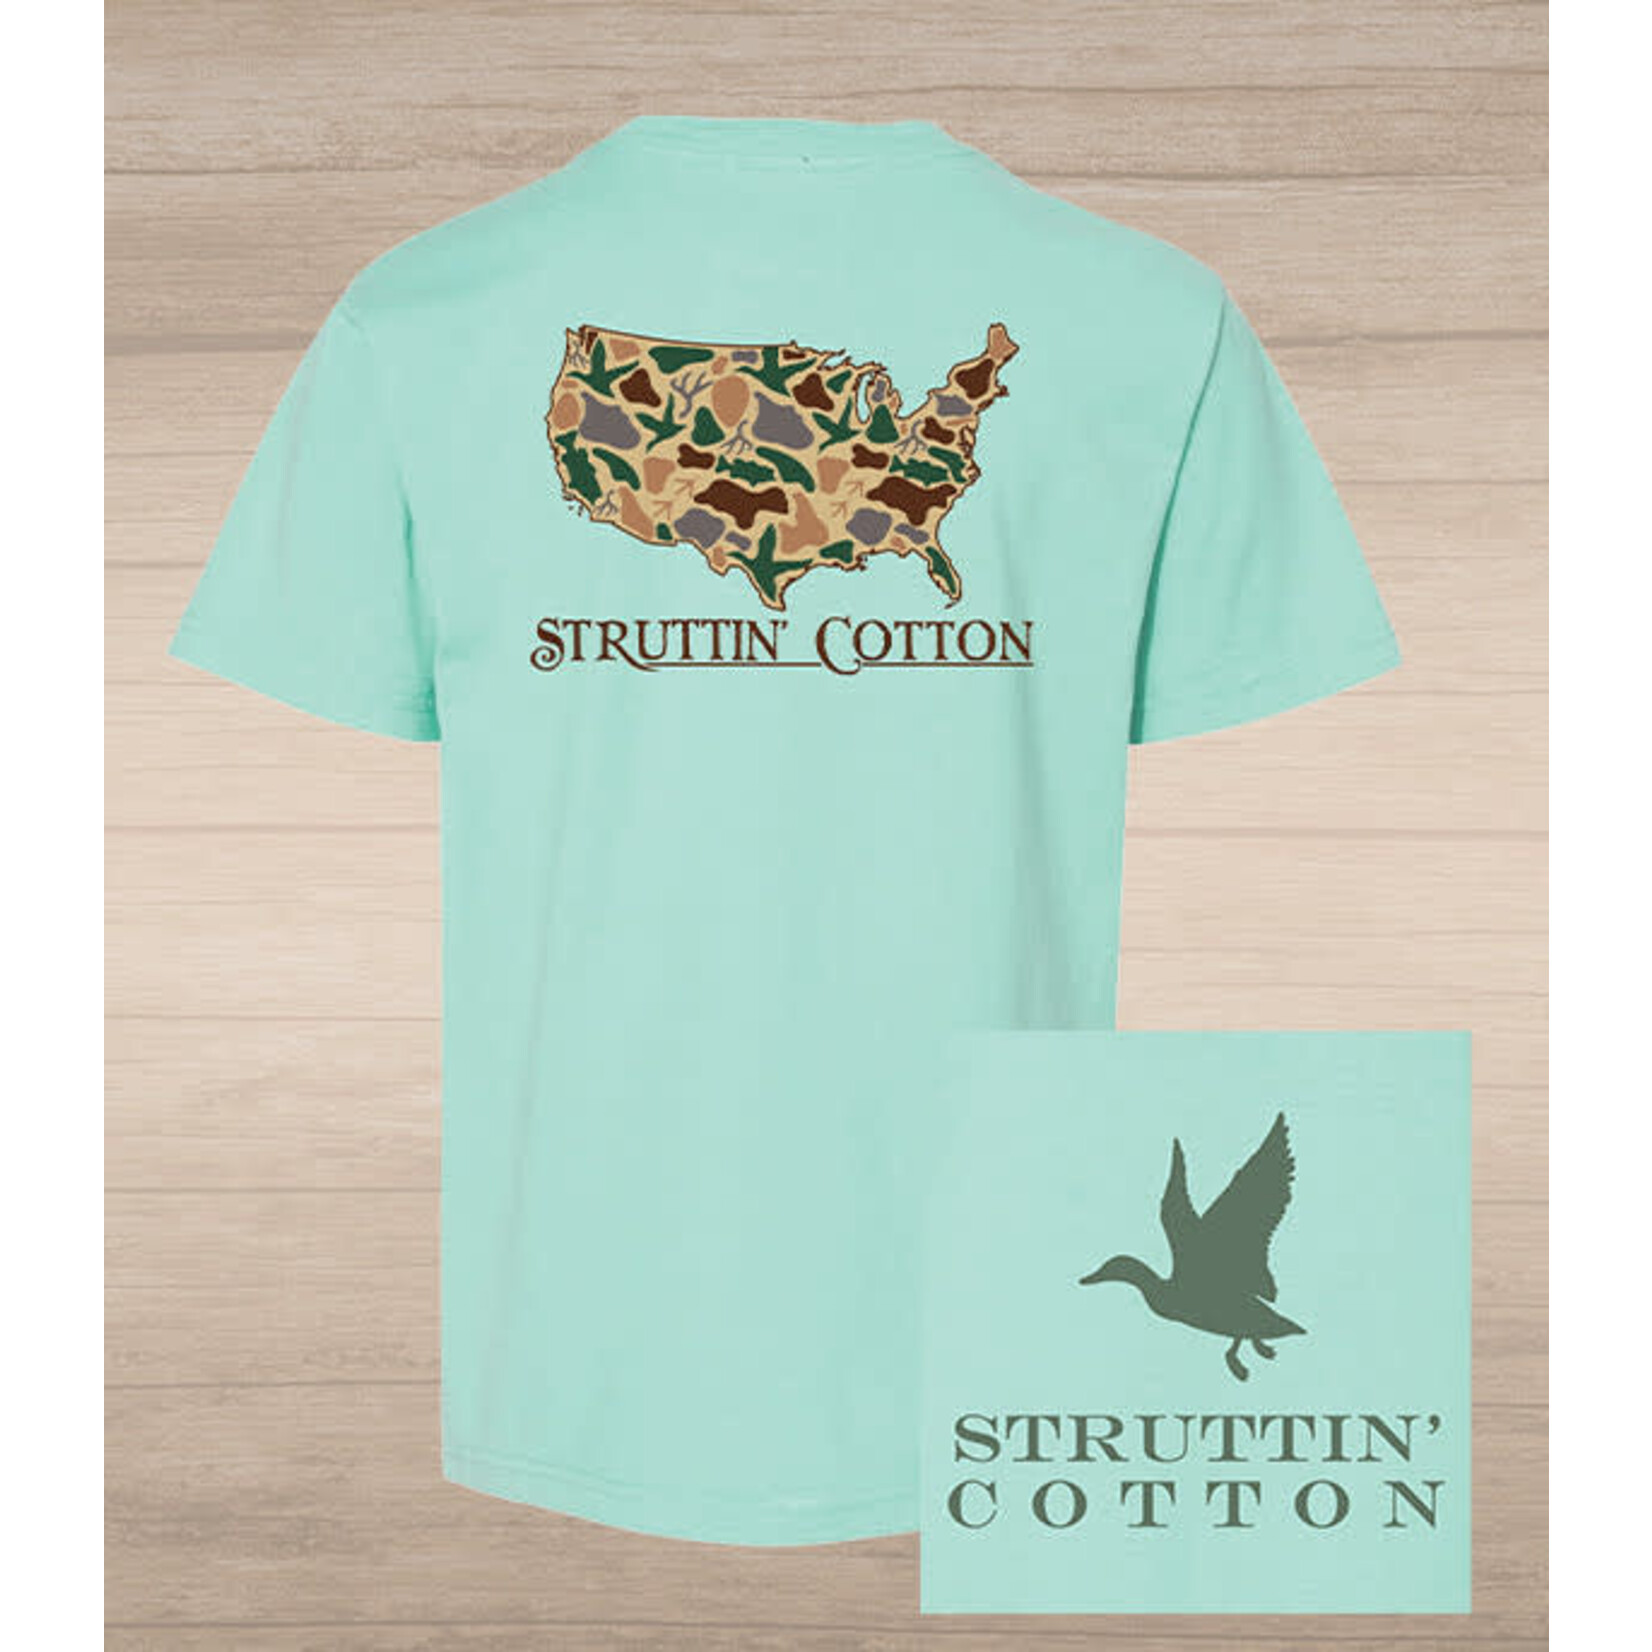 Struttin' Cotton Struttin Cotton Youth USA Standout Camo S/S TEE Shirt